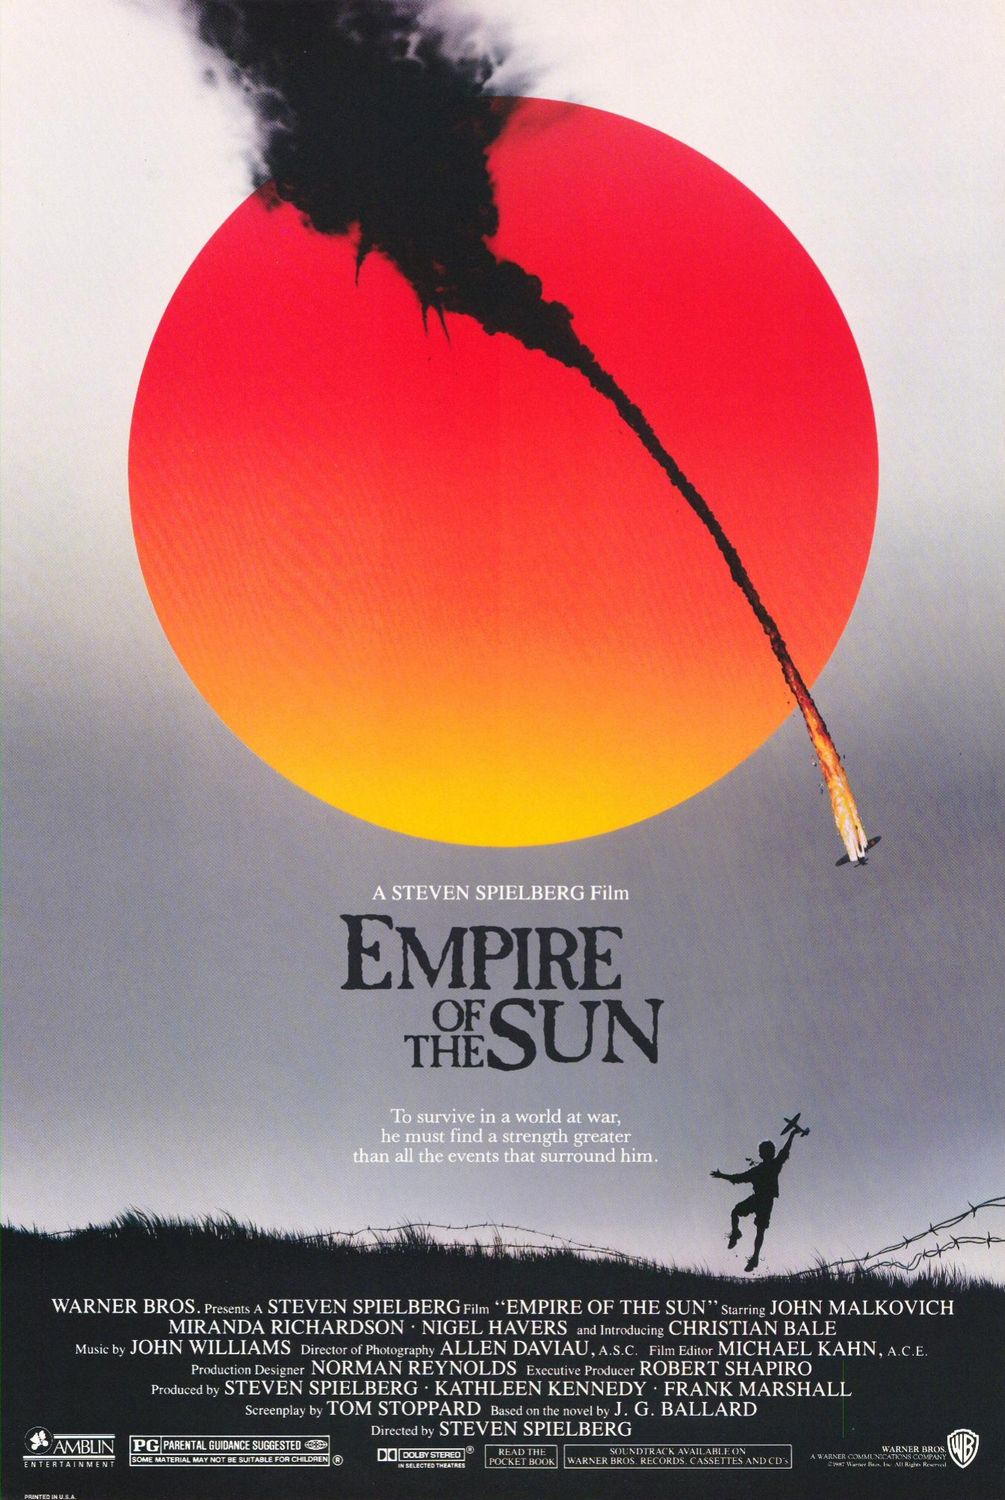 Постер - Империя Солнца: 1005x1500 / 215 Кб